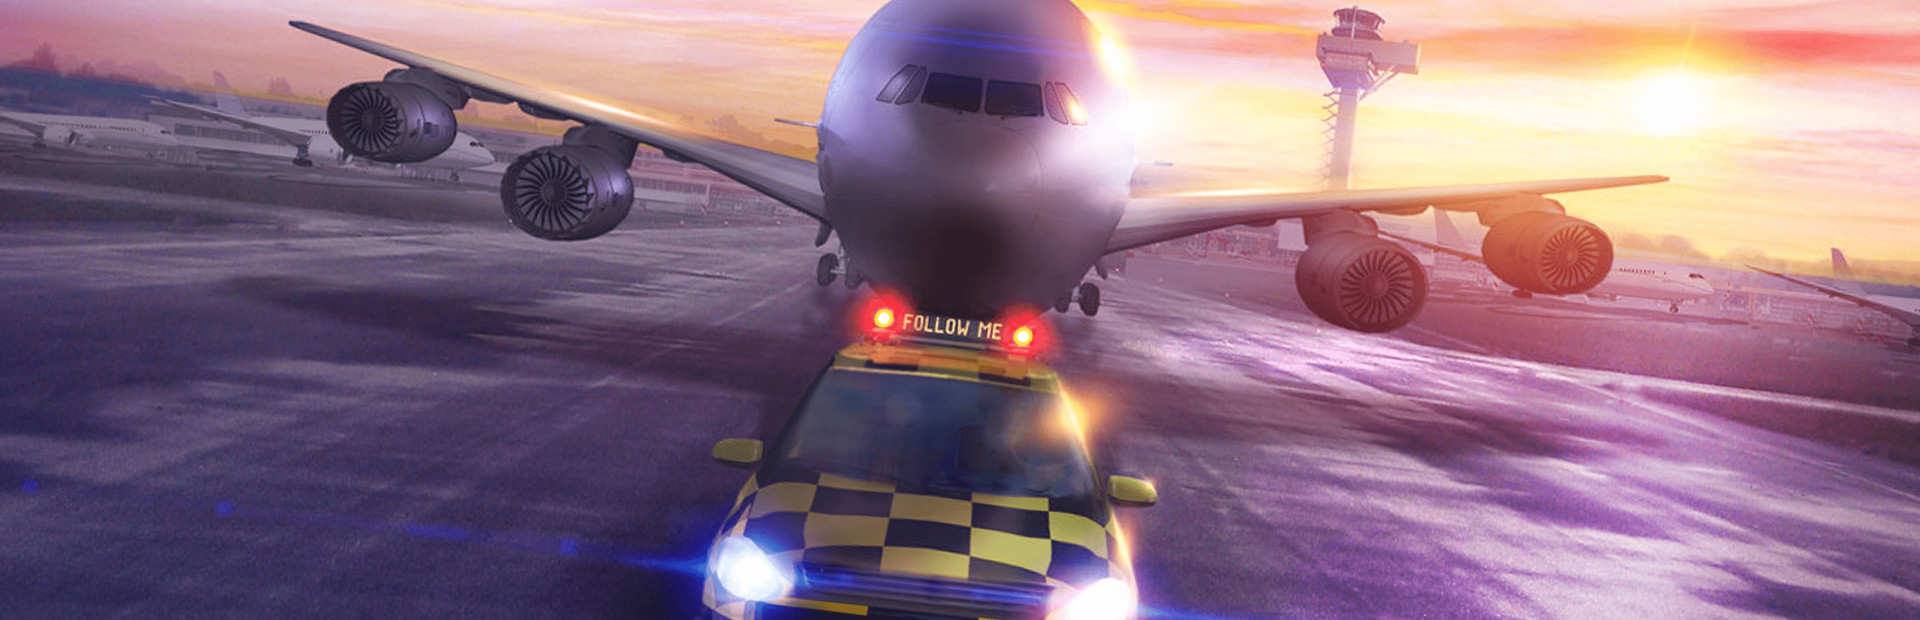 Airport Simulator 2015 cover image